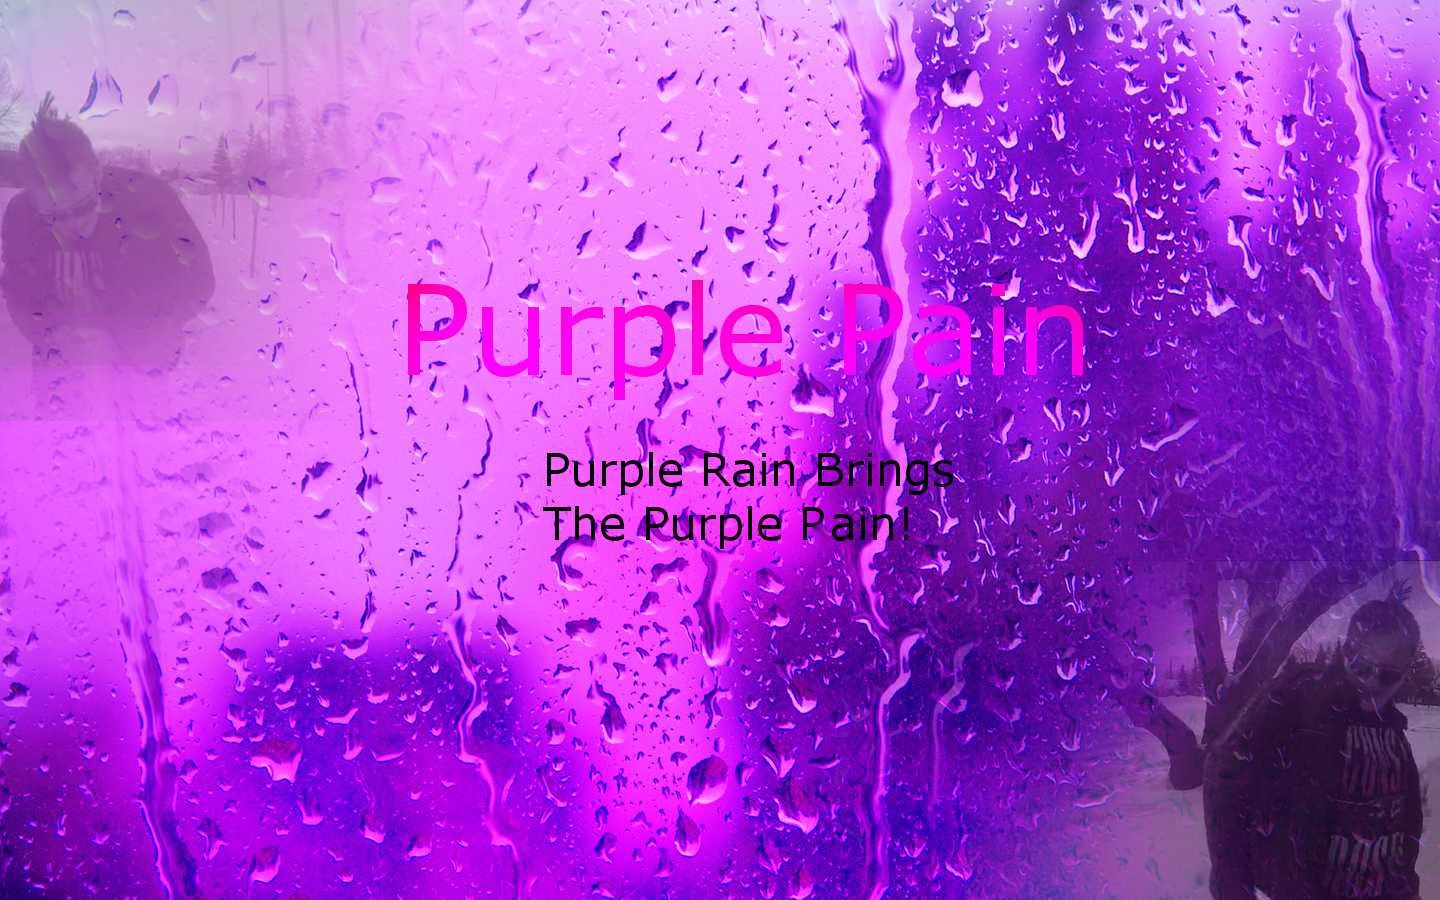 Candle it Purple Rain Rap - YouTube